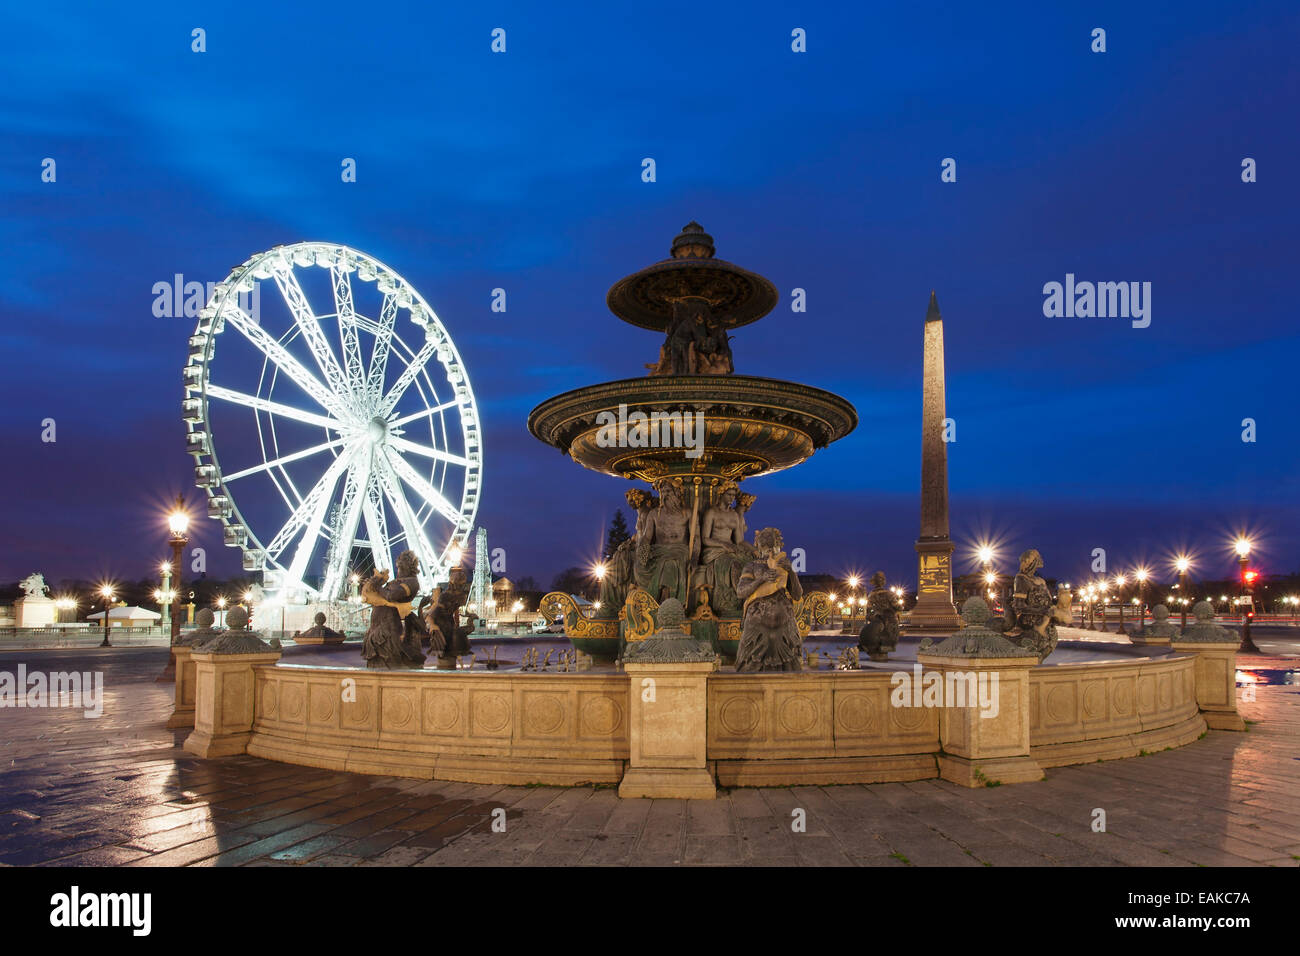 Fountain on Place de la Concorde square in front of a ferris wheel and an obelisk, Paris, Ile-de-France, France Stock Photo